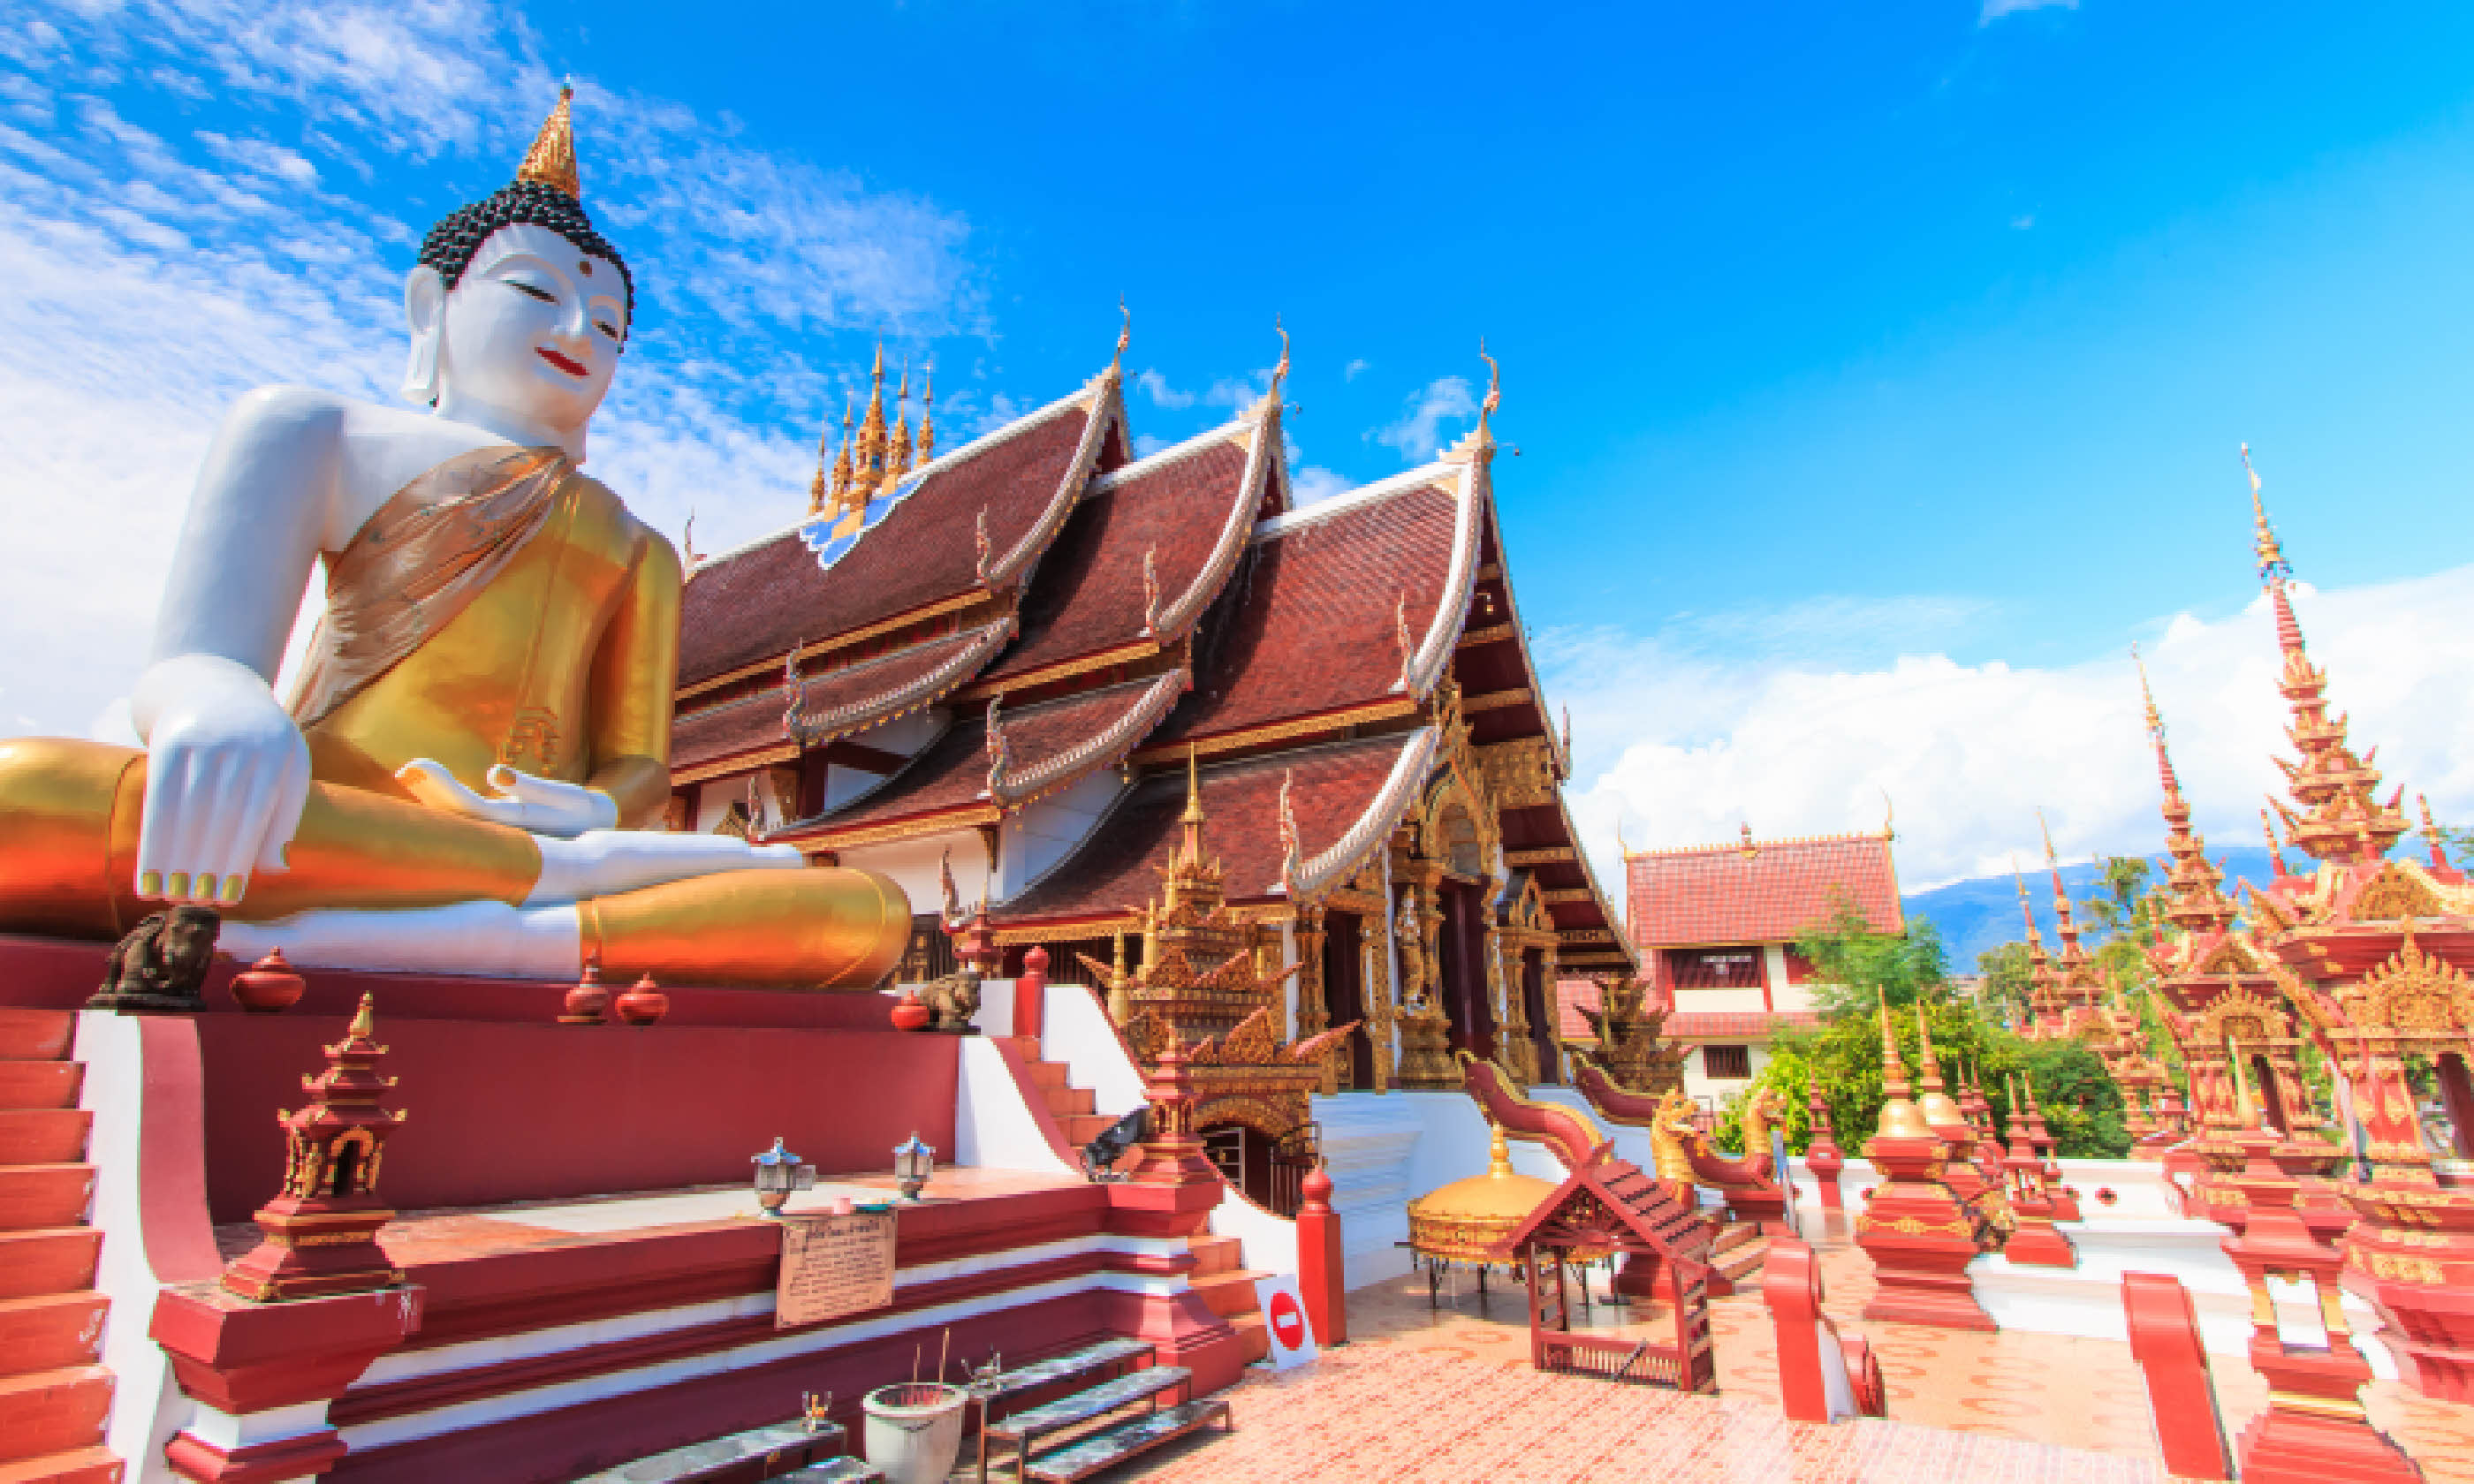 Chiang Mai (Shutterstock: see credit below)